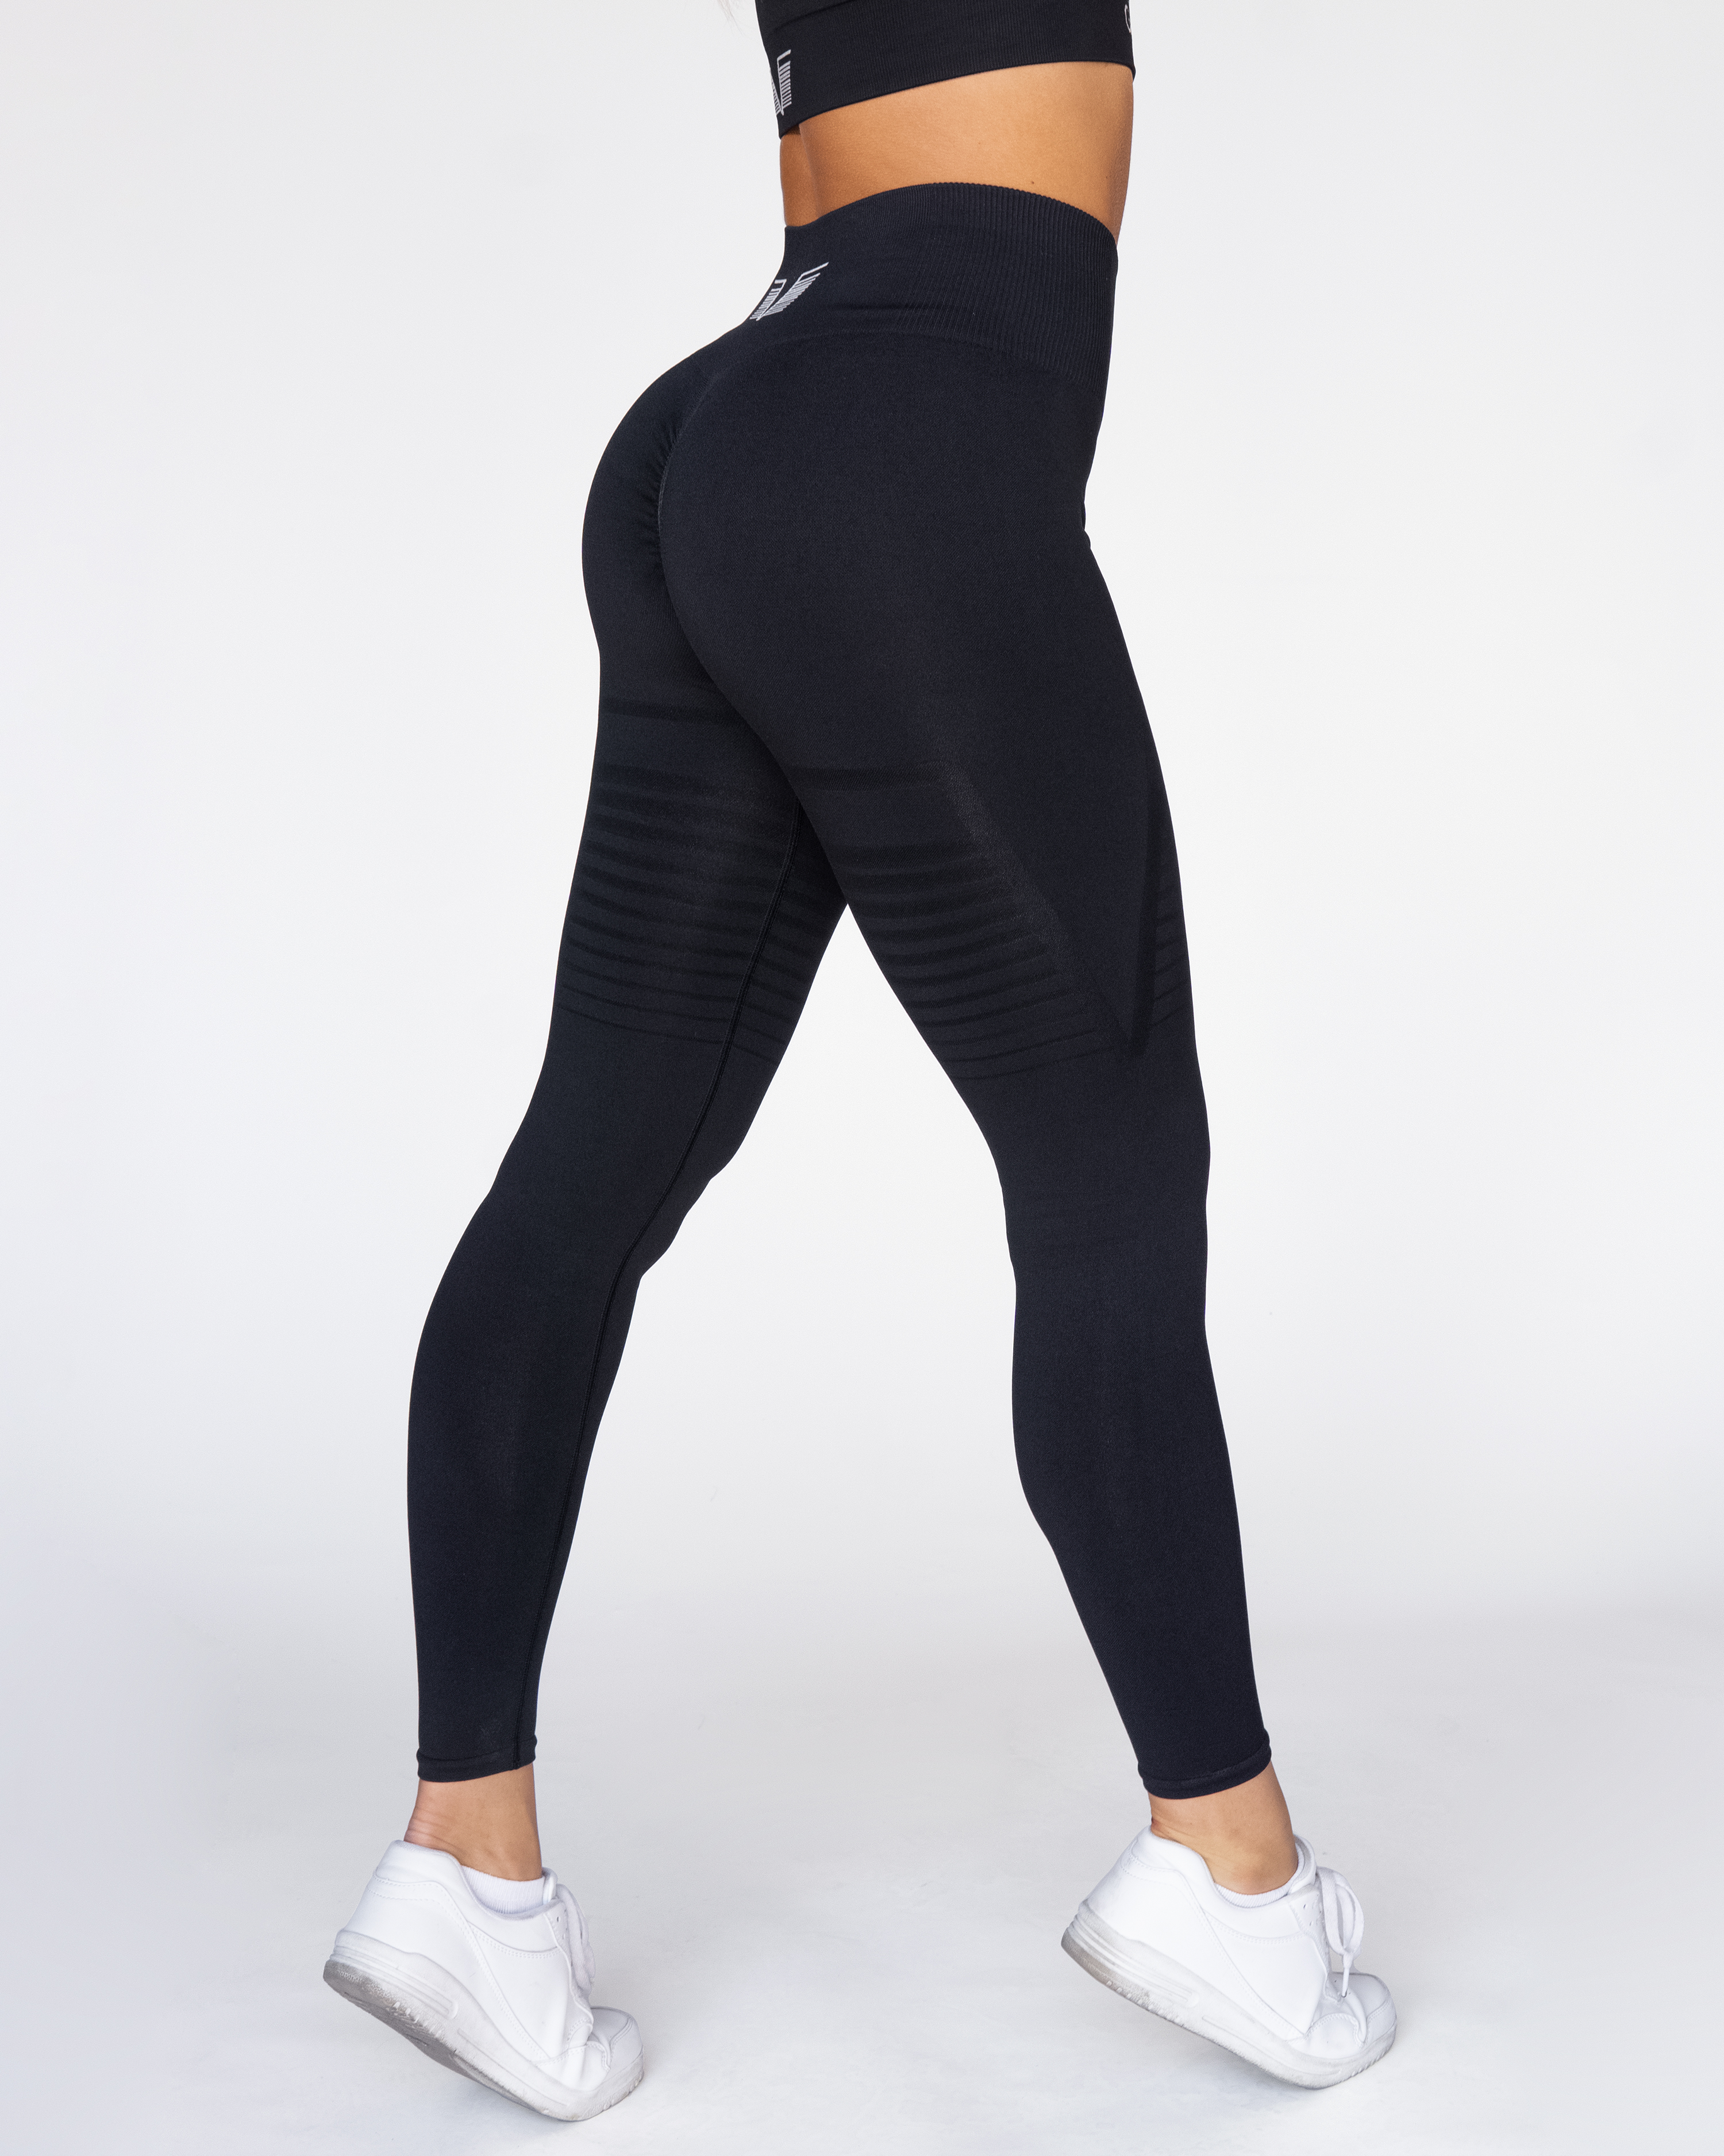 SEASUM Scrunch Butt Workout Leggings Women's High Waisted Booty Lifting  Yoga Pants Textured Tummy Control Legging